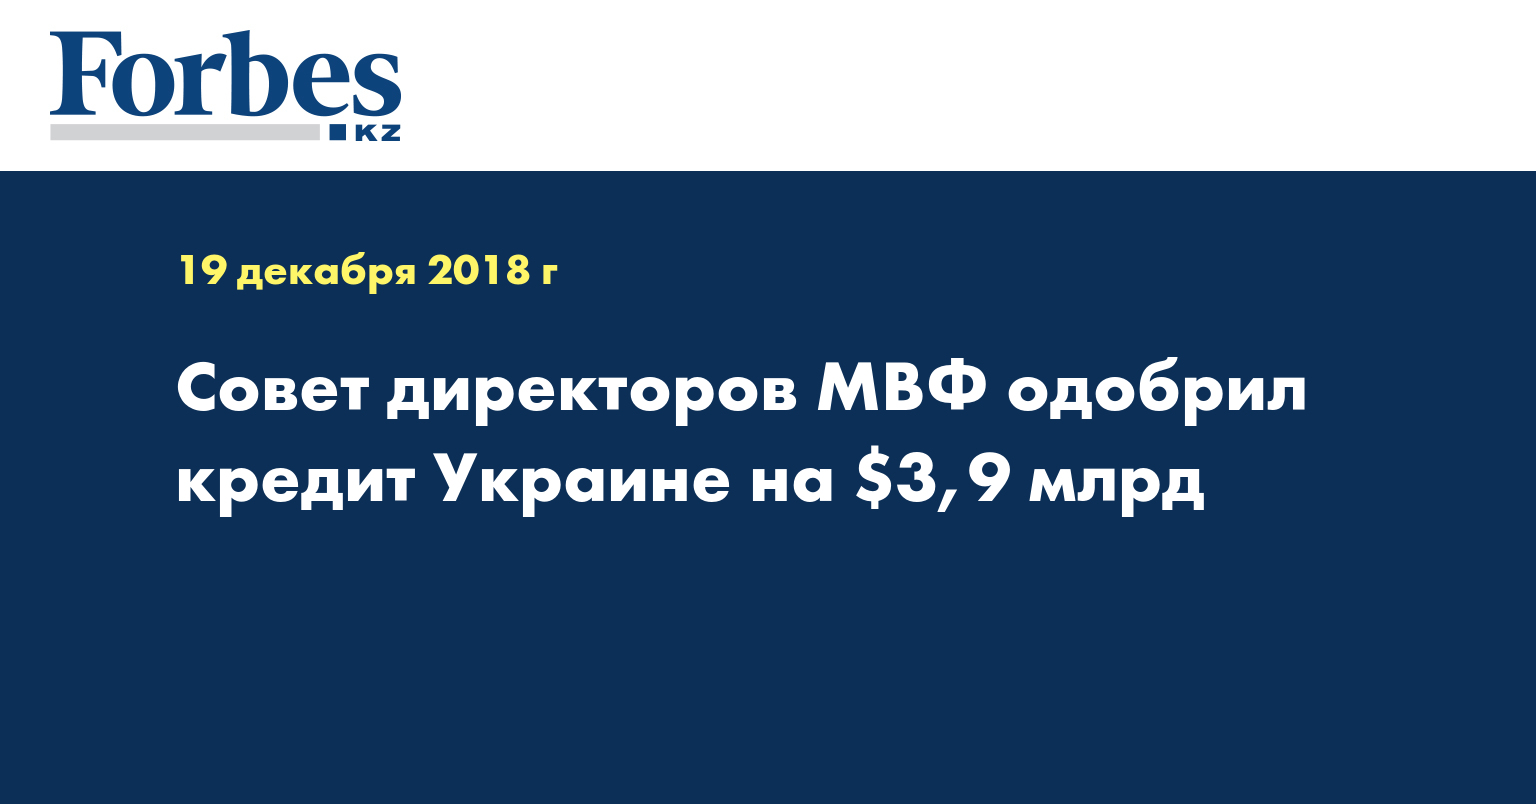 Совет директоров МВФ одобрил кредит Украине на $3,9 млрд